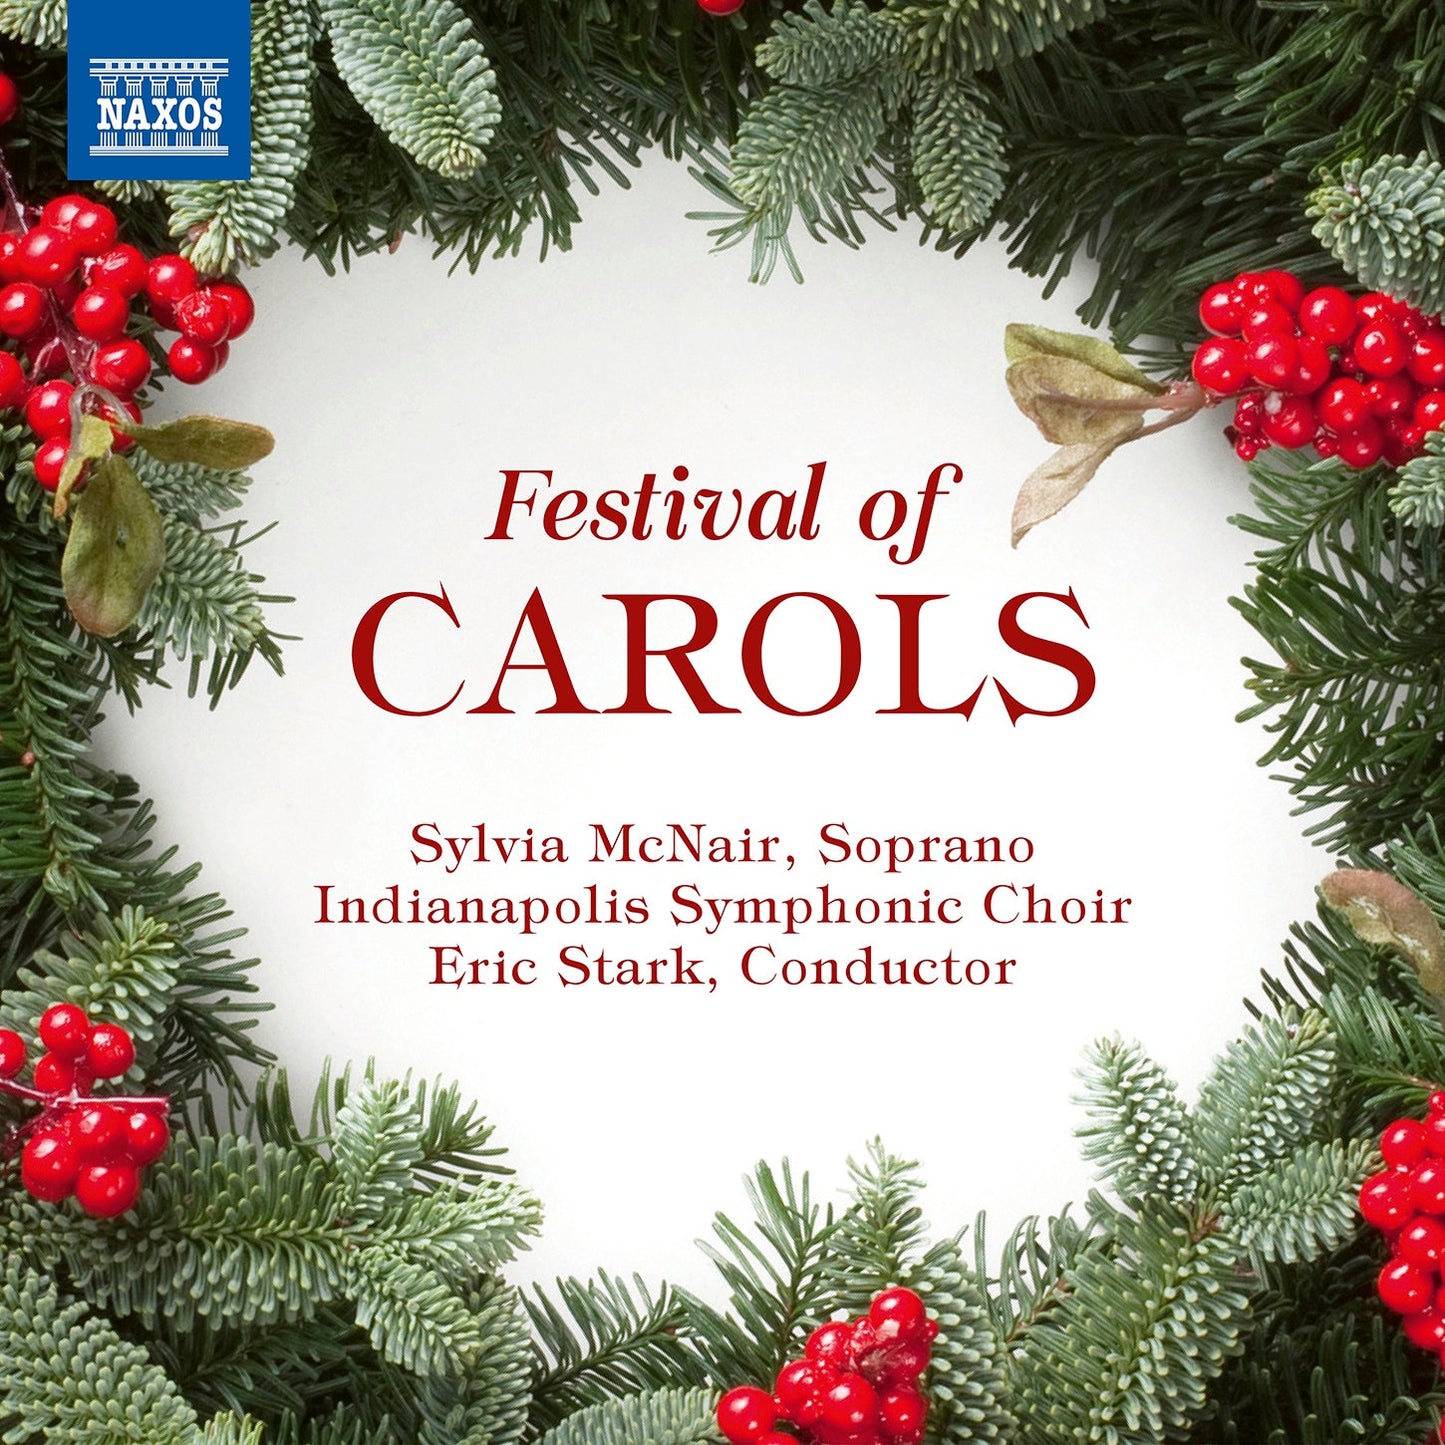 Festival of Carols / Indianapolis Symphonic Choir